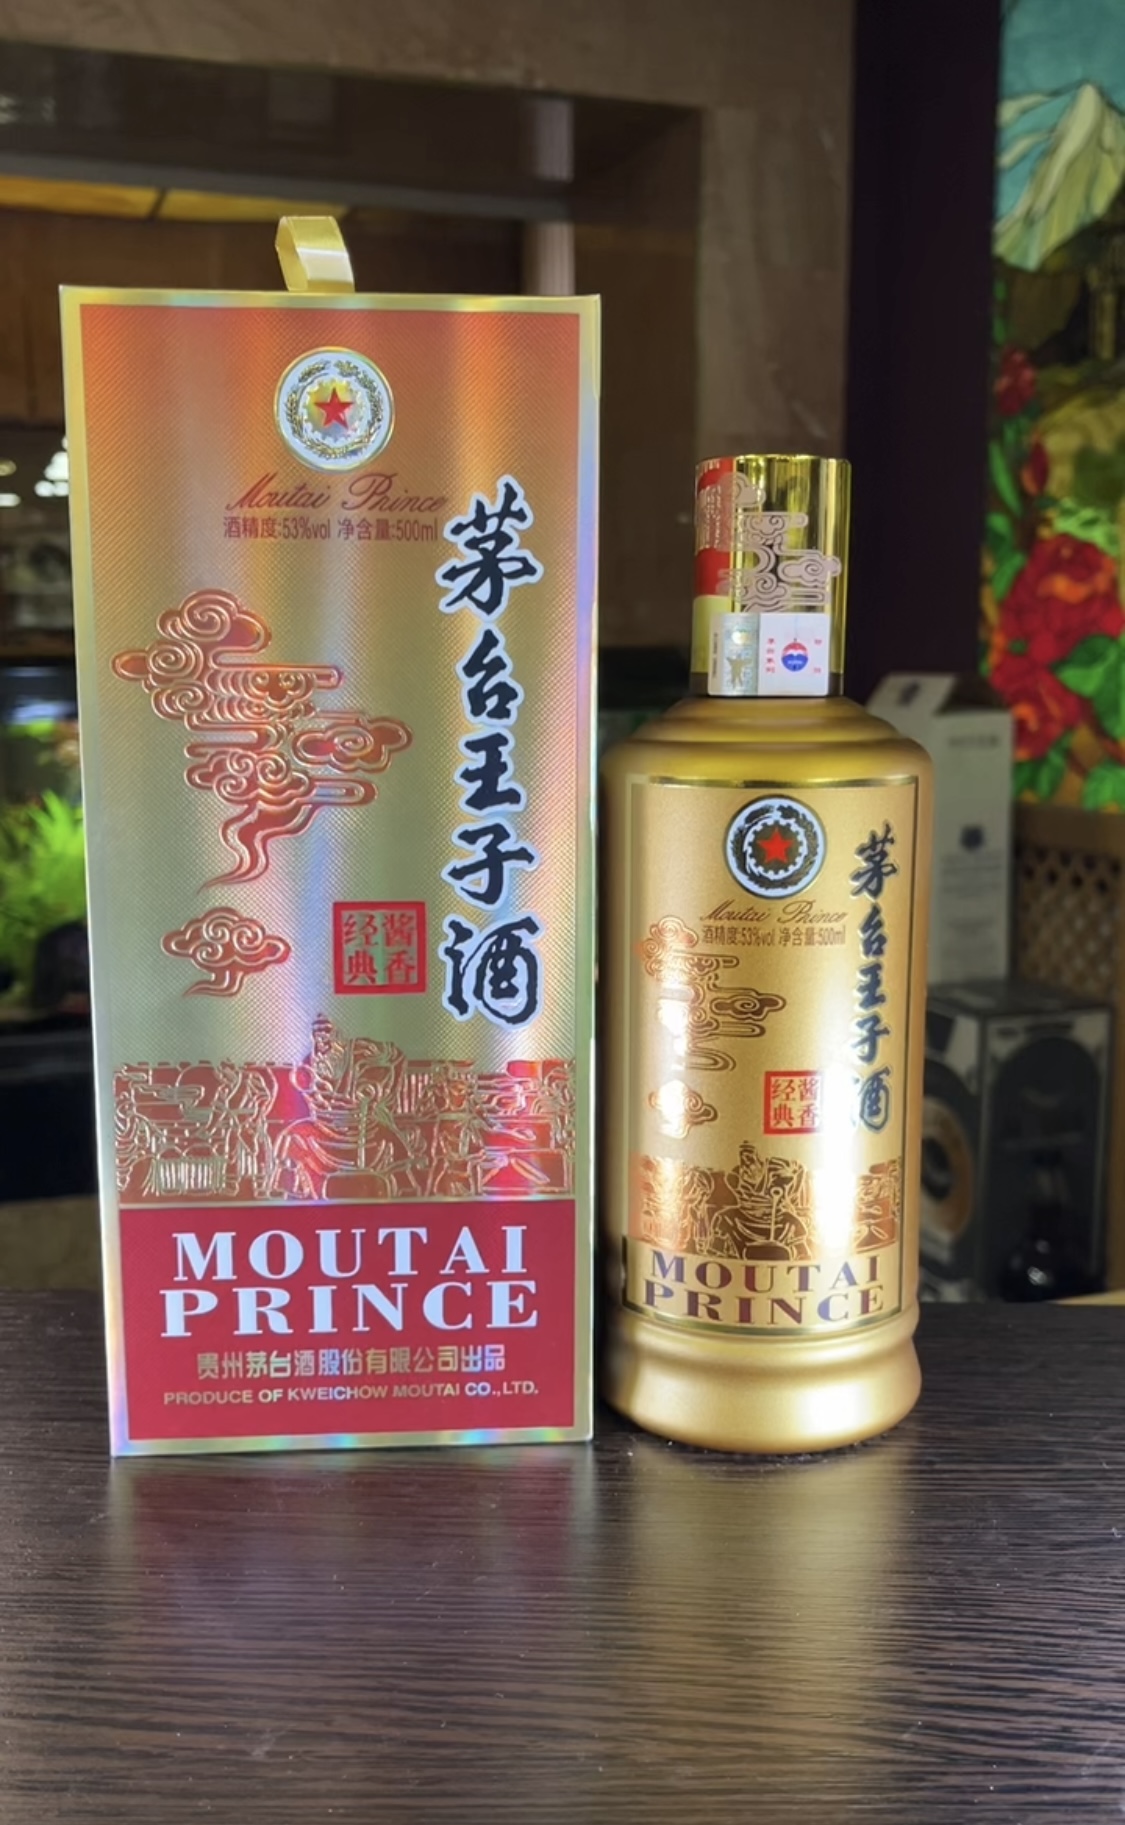 Kweichow Moutai Classic Prince Водка Байцзю Куайчжоу Маотай Принц Классический 0.5л в подарочной упаковке